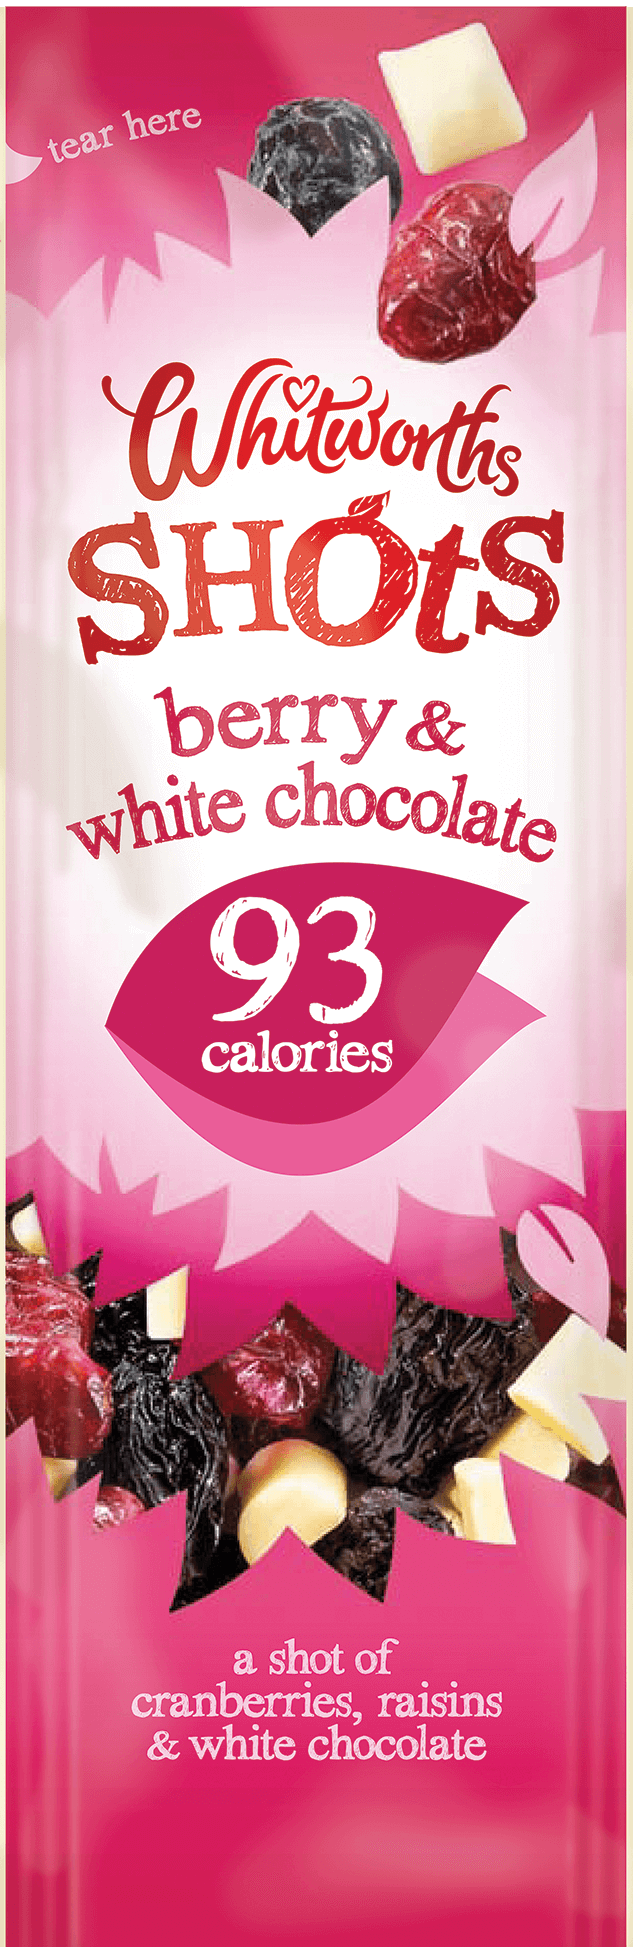 Whitworths Shots - Berry & White Chocolate (93 Calories)